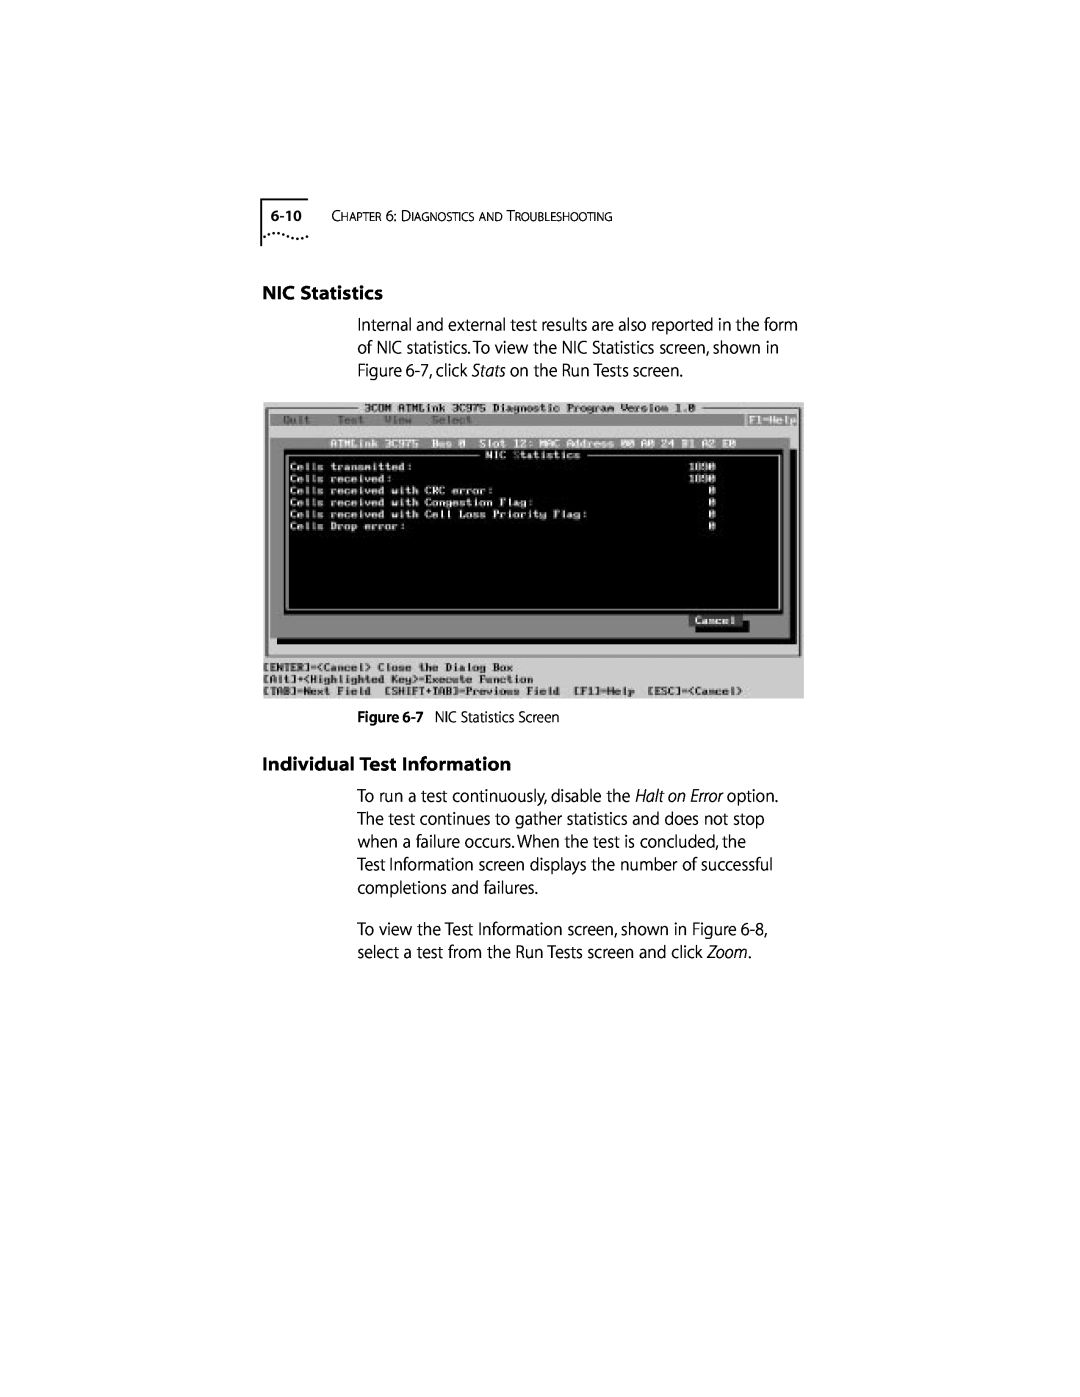 3Com 155 PCI manual Individual Test Information, 7 NIC Statistics Screen 